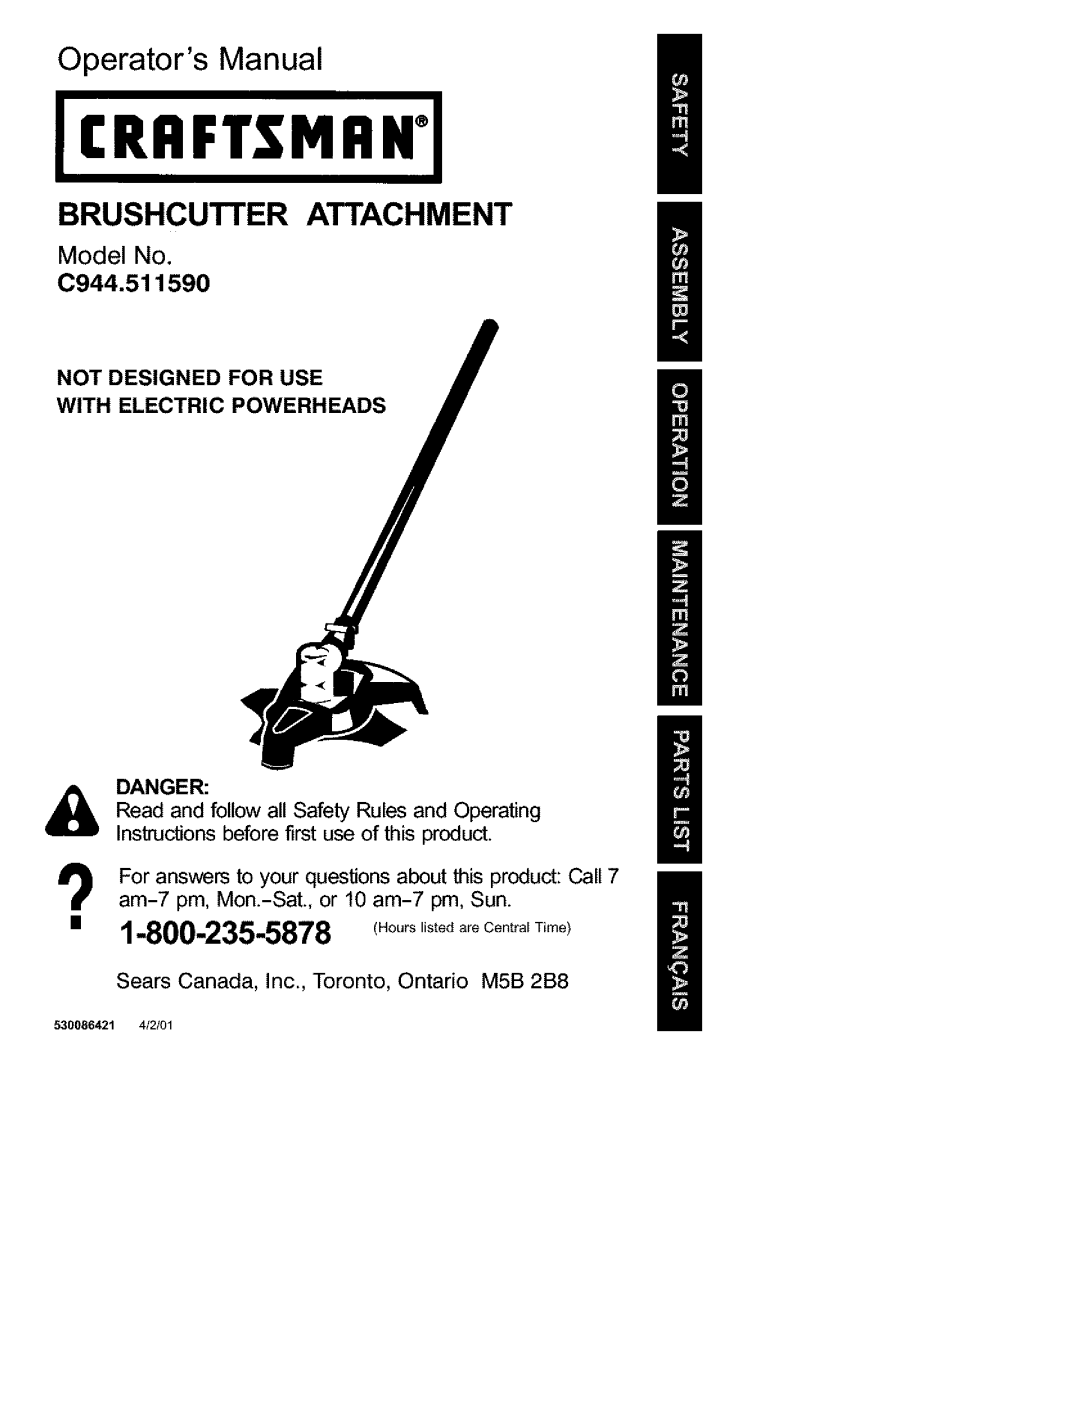 Craftsman C944.511590 manual Model No, Operators Manual, Brushcutier Attachment, 0944.511590, Danger, 530086421 4/2/01 